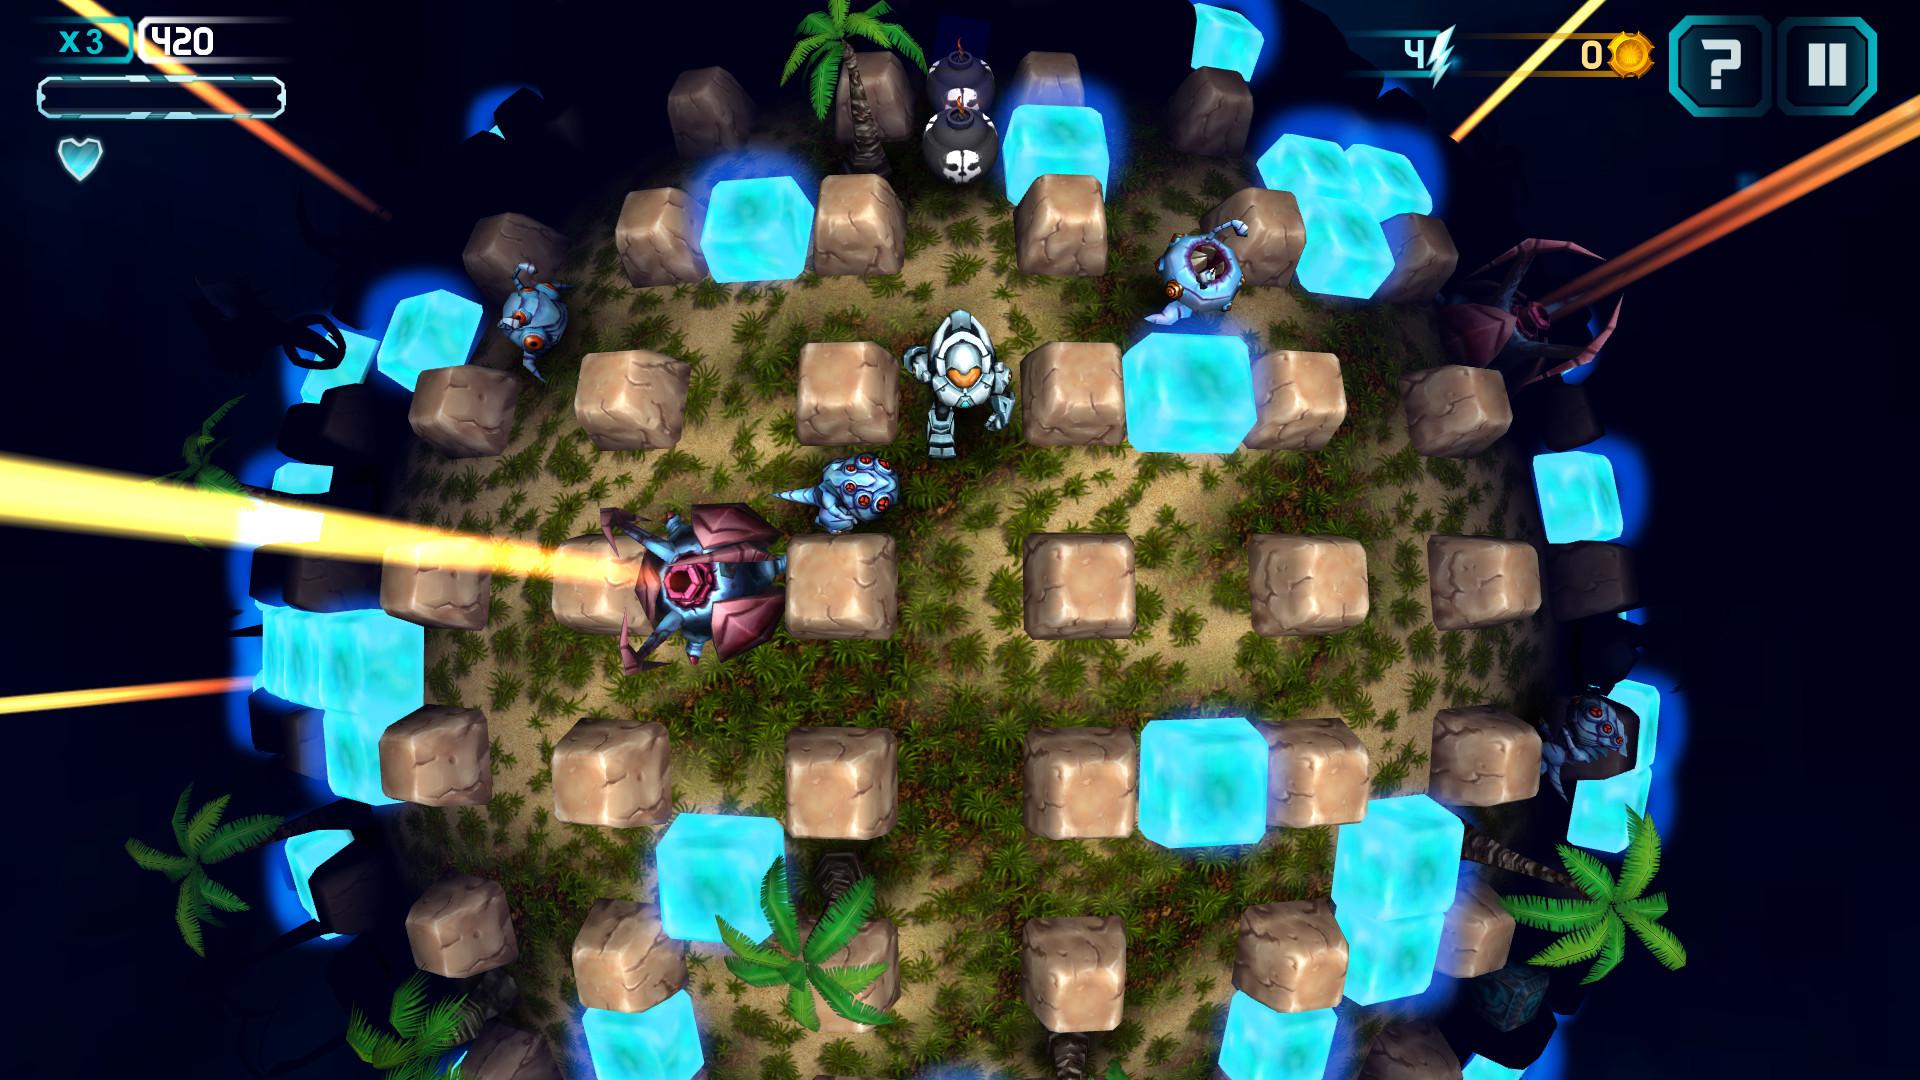 Screenshot №7 from game BomberZone